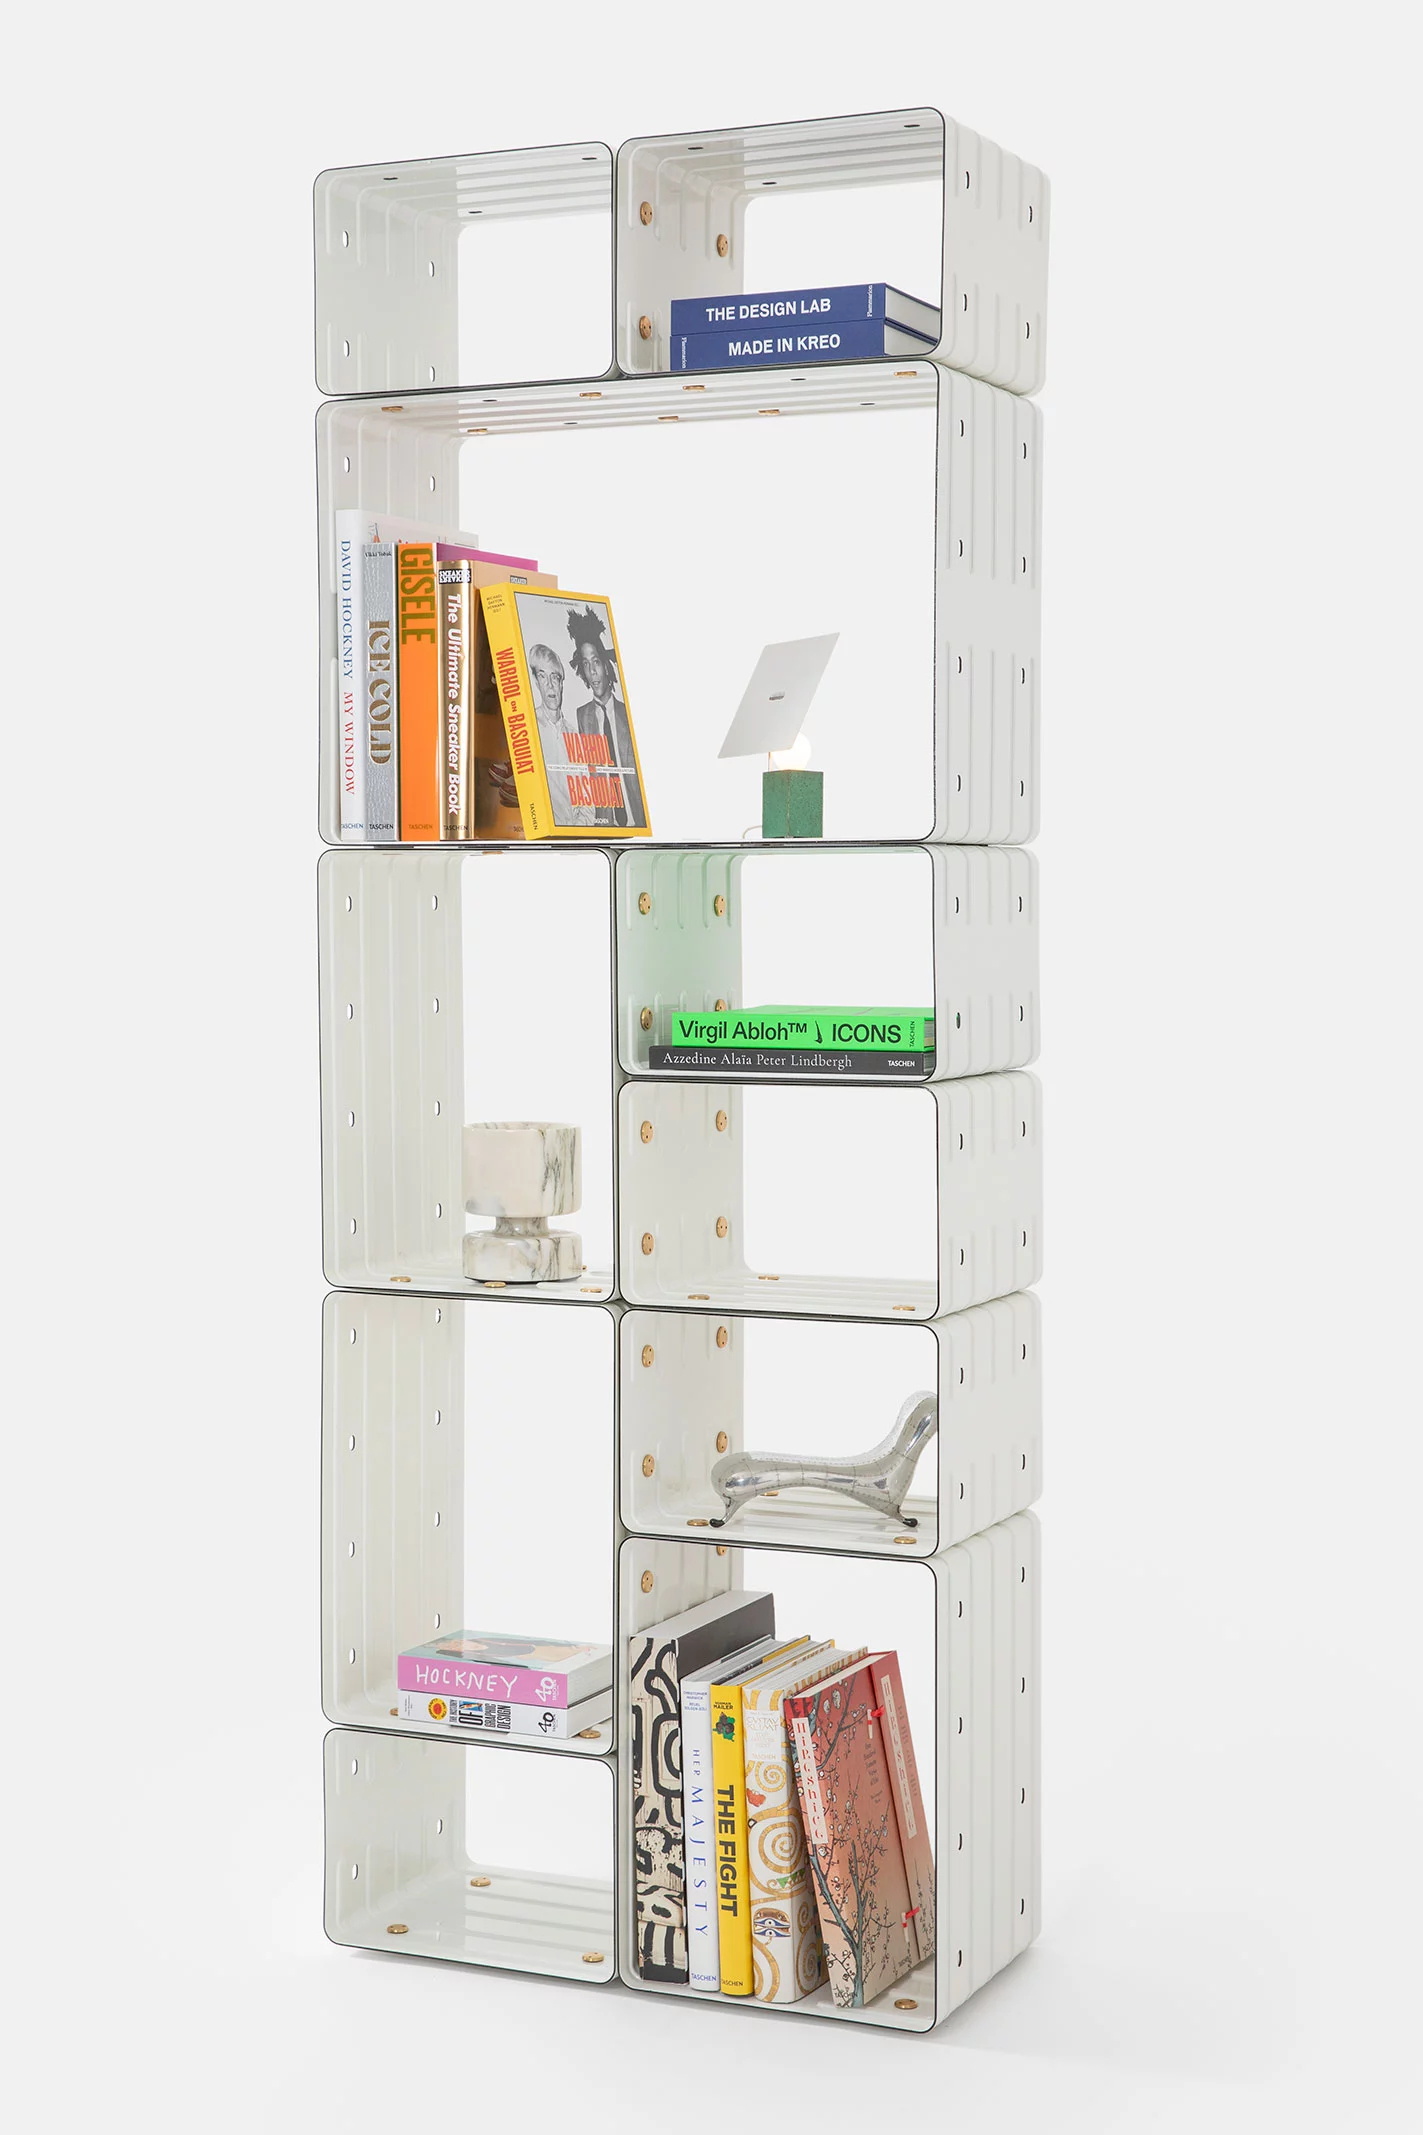 Quobus 1,3,6 monochromatic - Marc Newson - Bookshelf - Galerie kreo